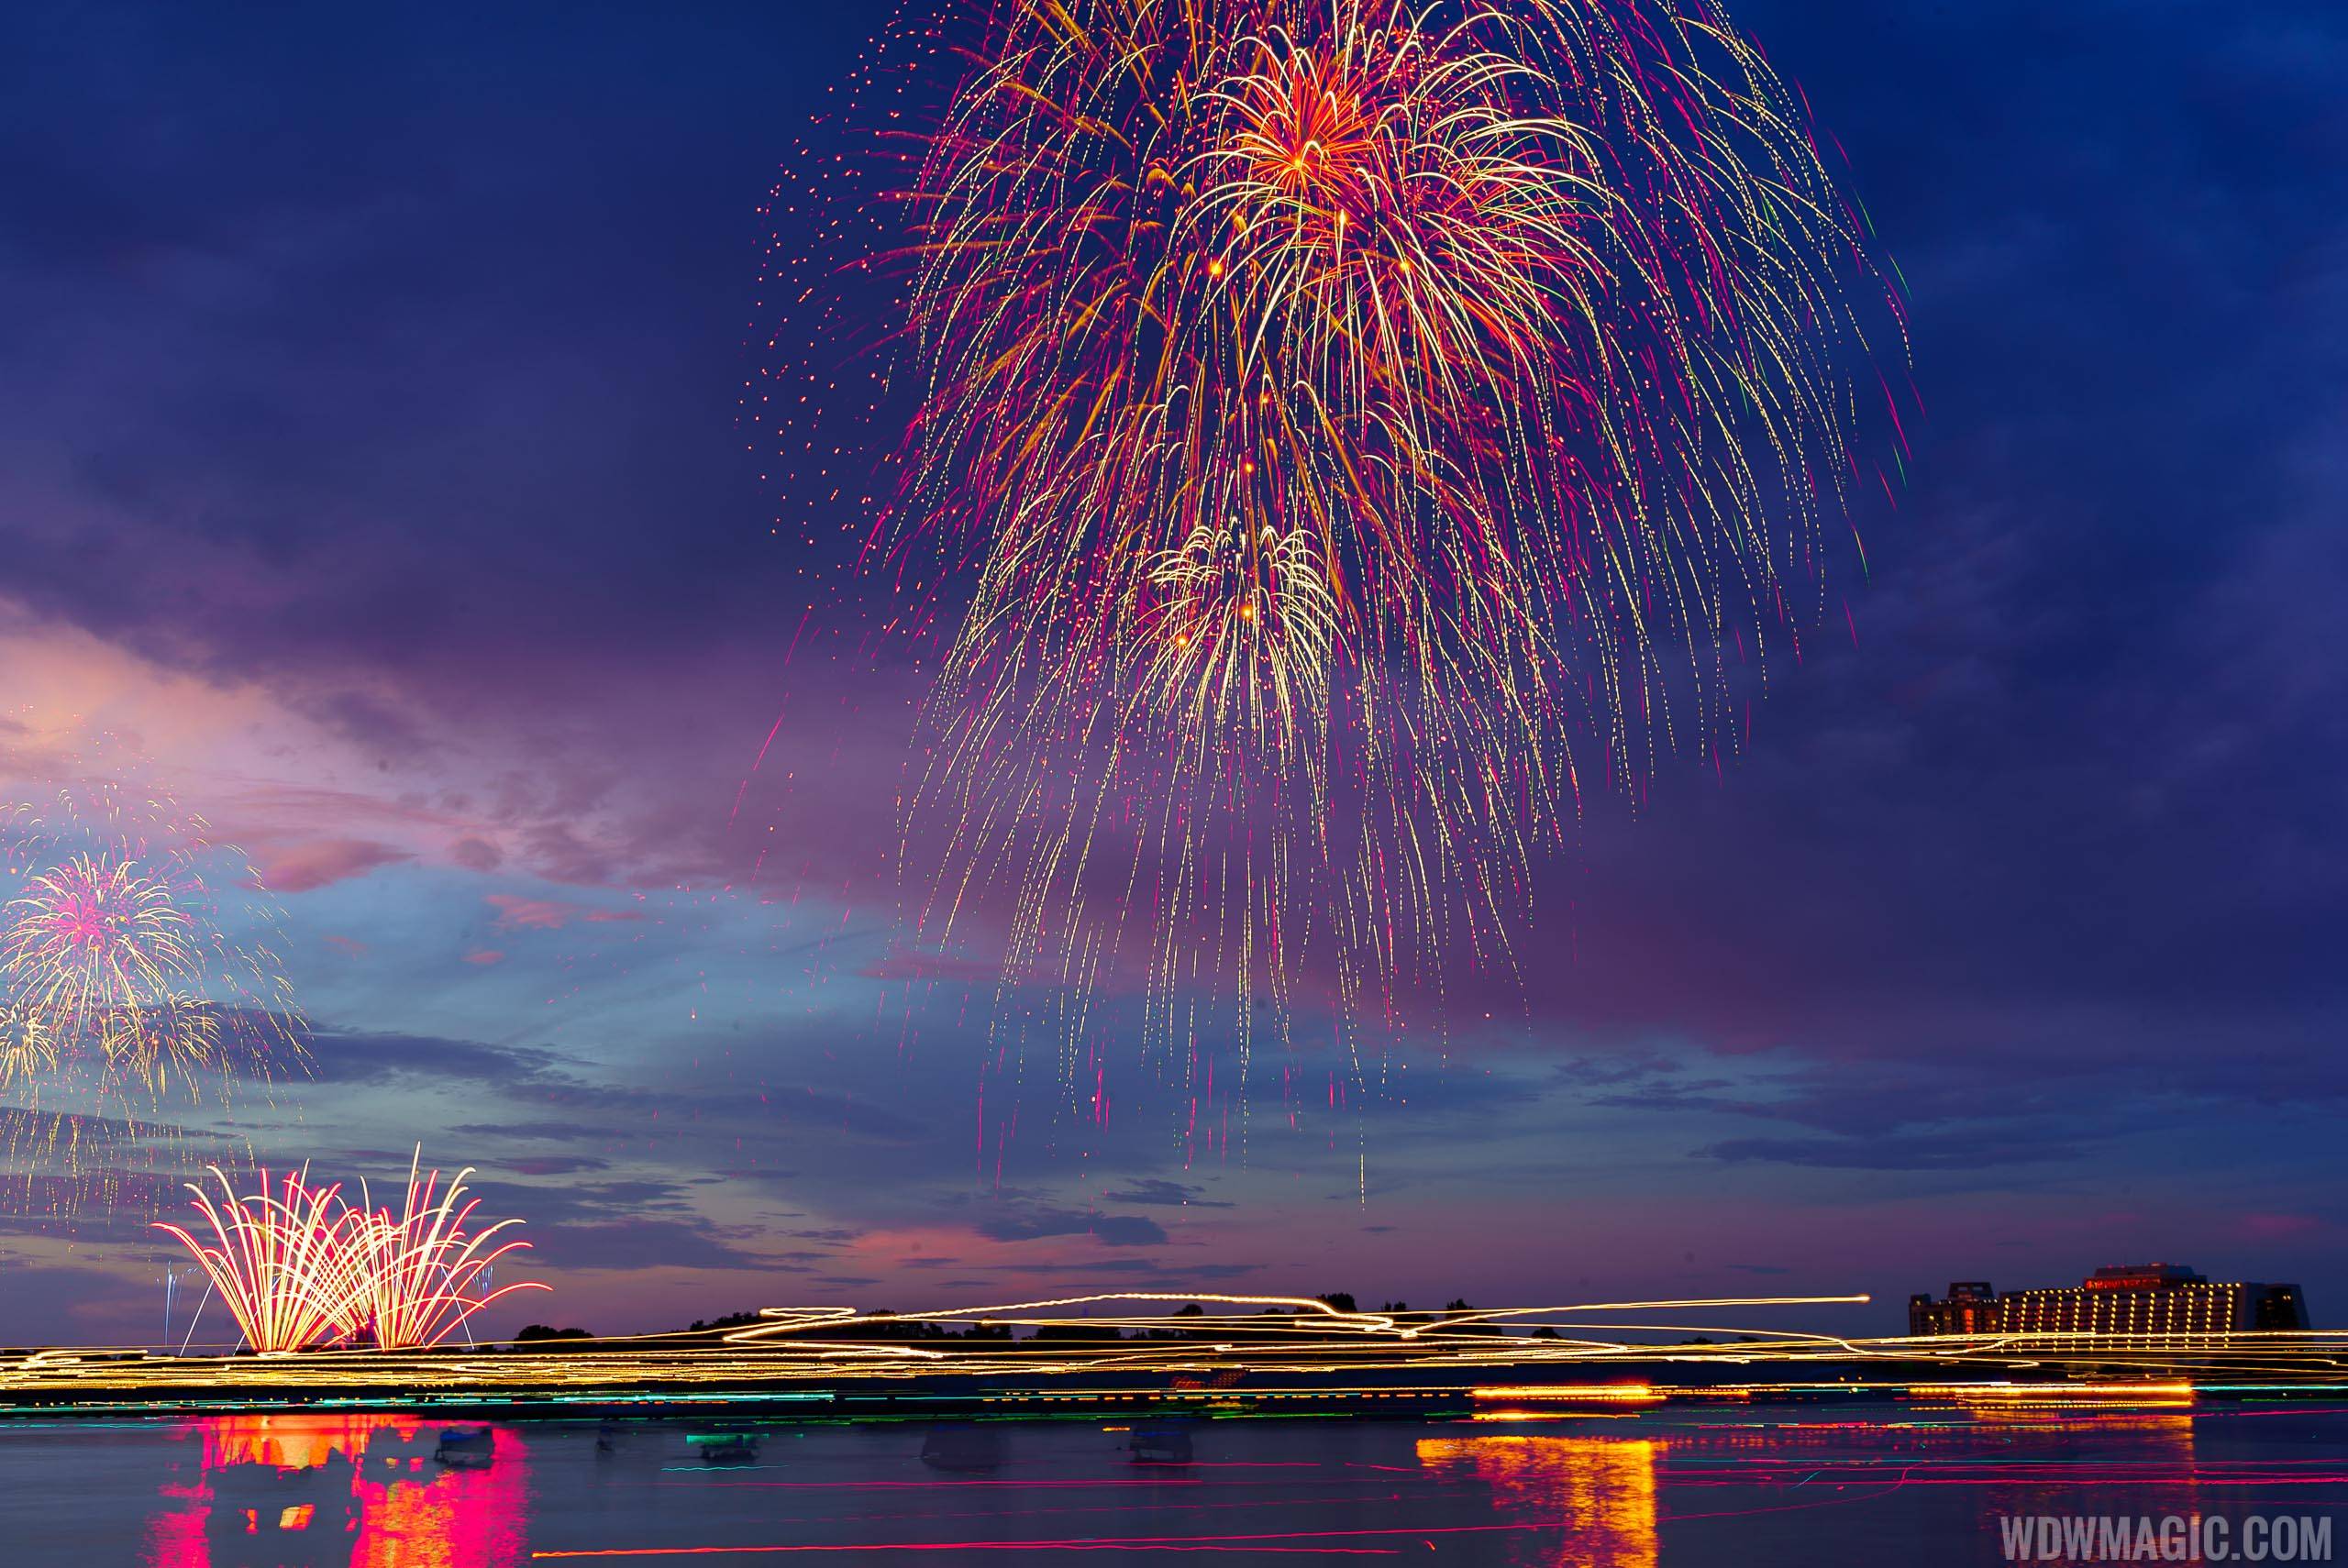 Disney's Celebrate America firework show